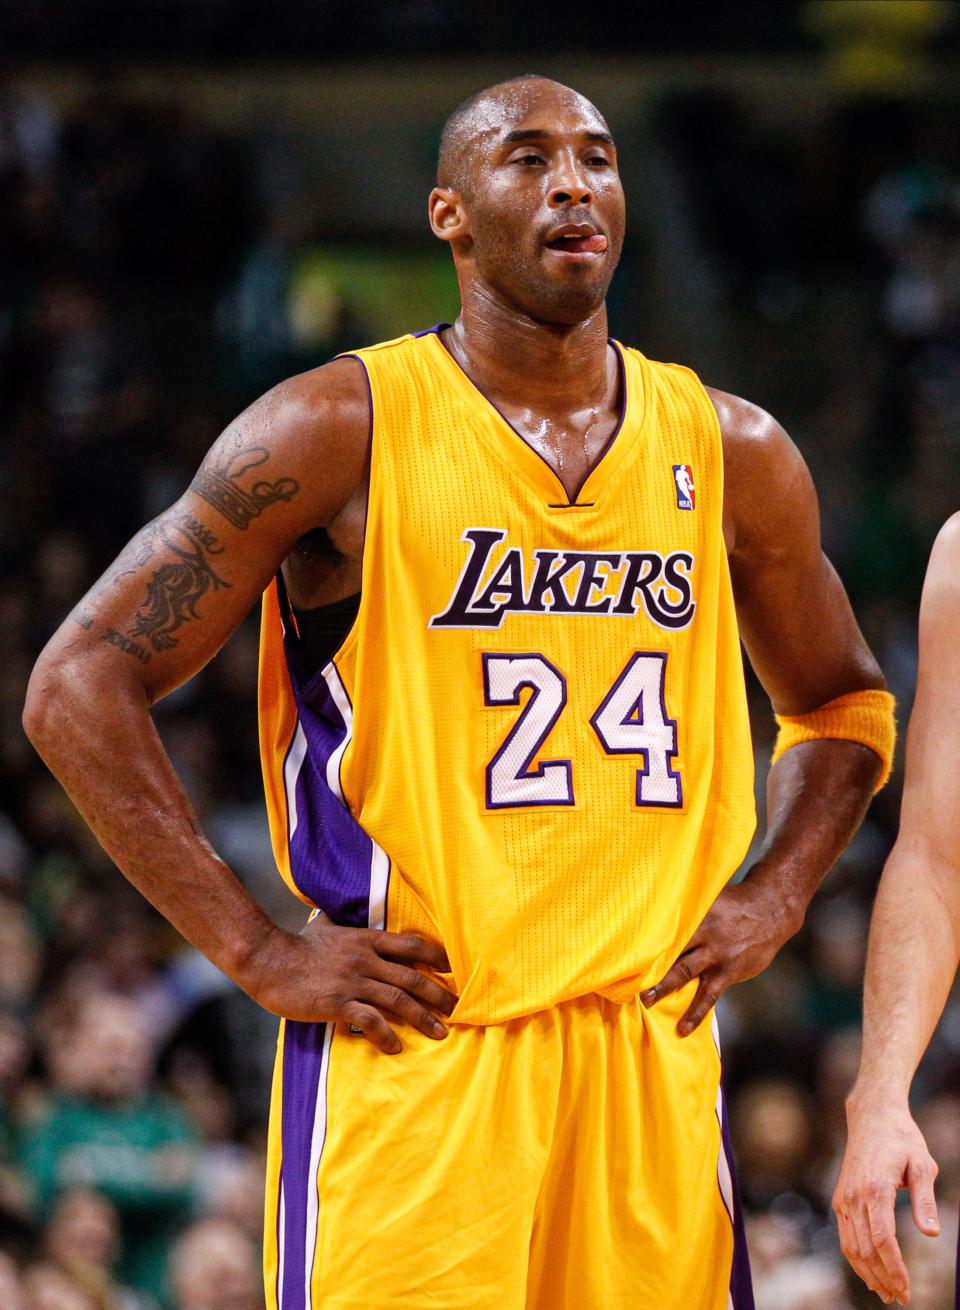 Kobe Bryant played 20 seasons in the NBA.